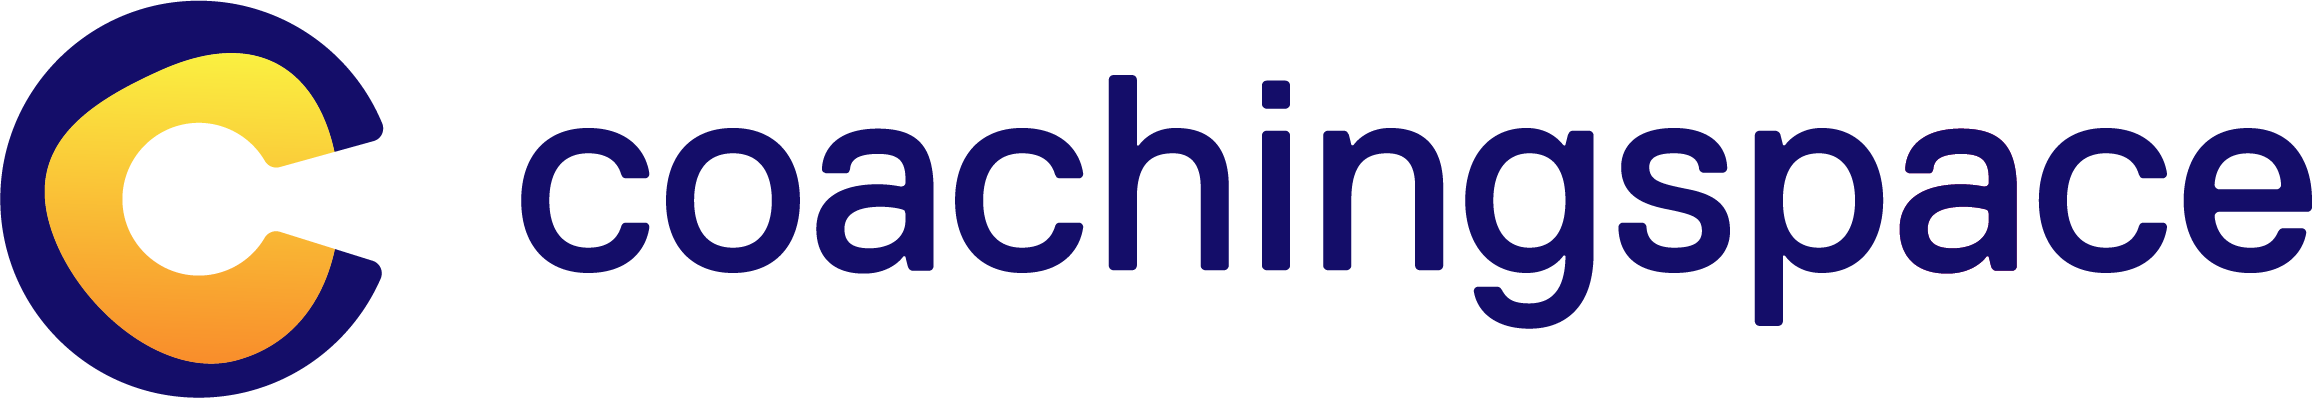 logo Coachingspacenet